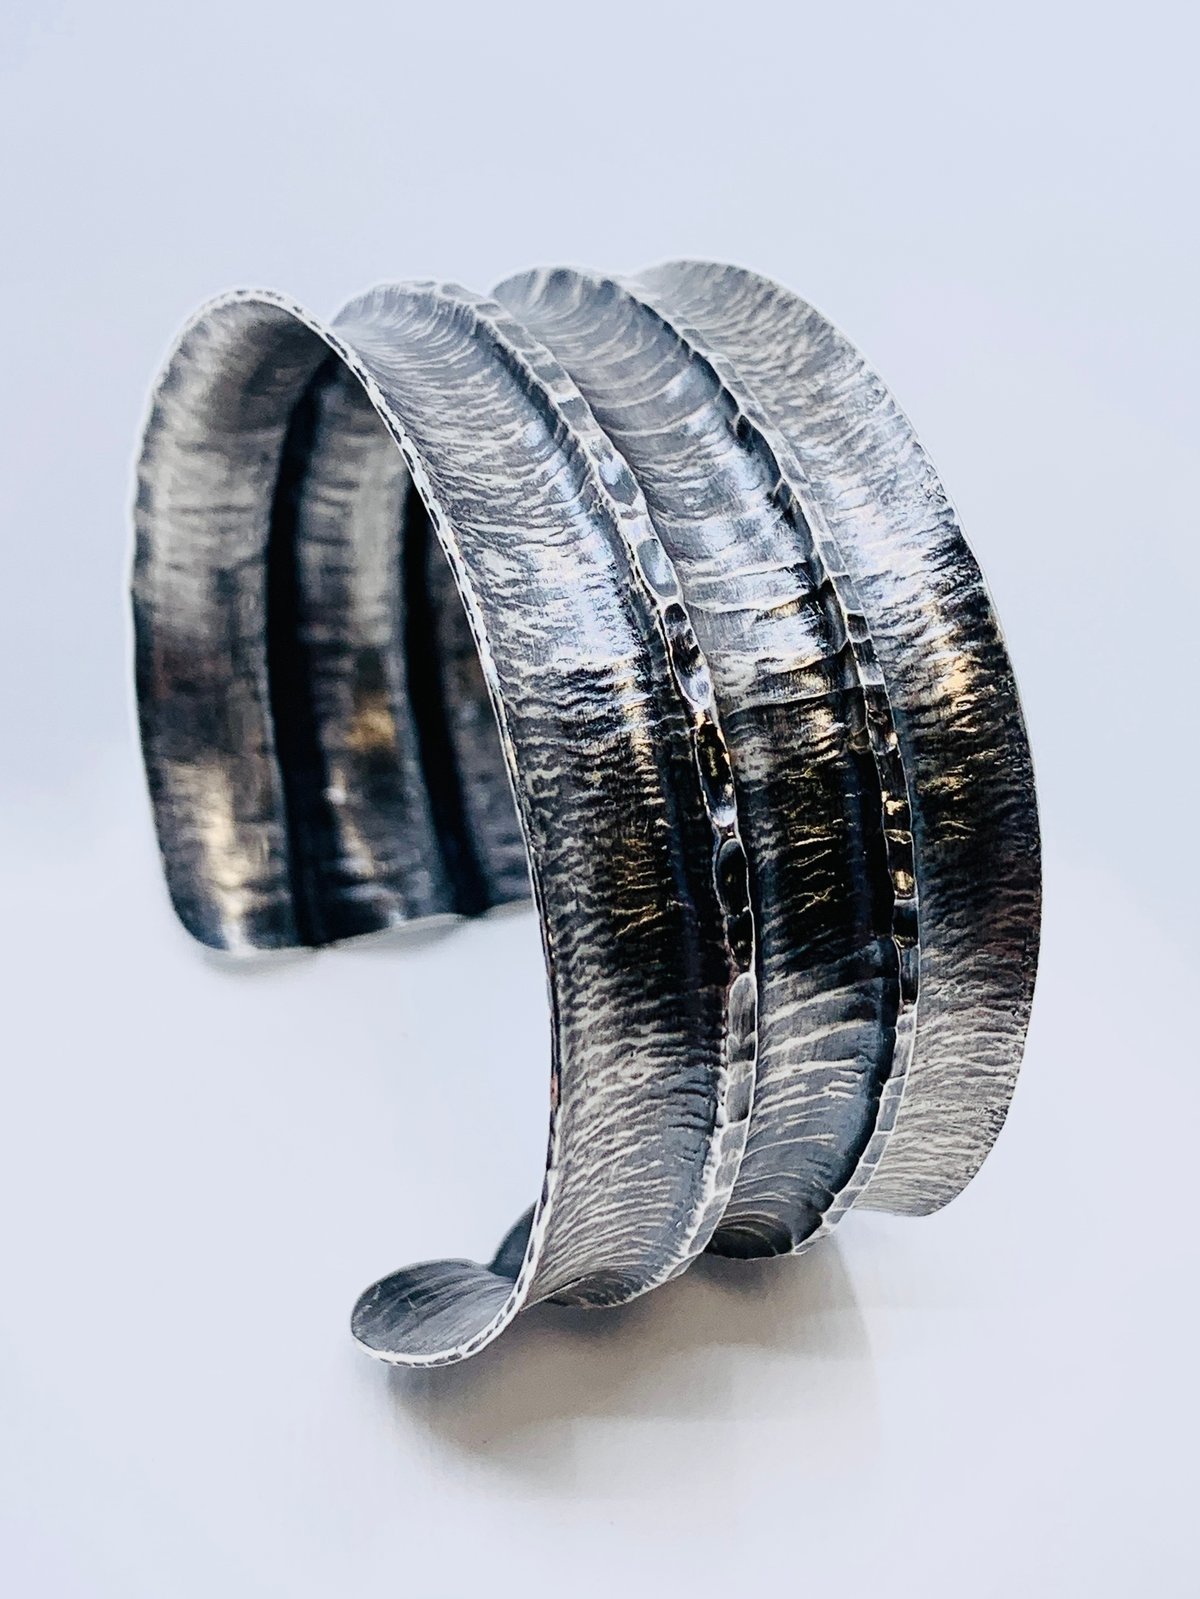 Textured Silver Bracelet by Lauren Nall